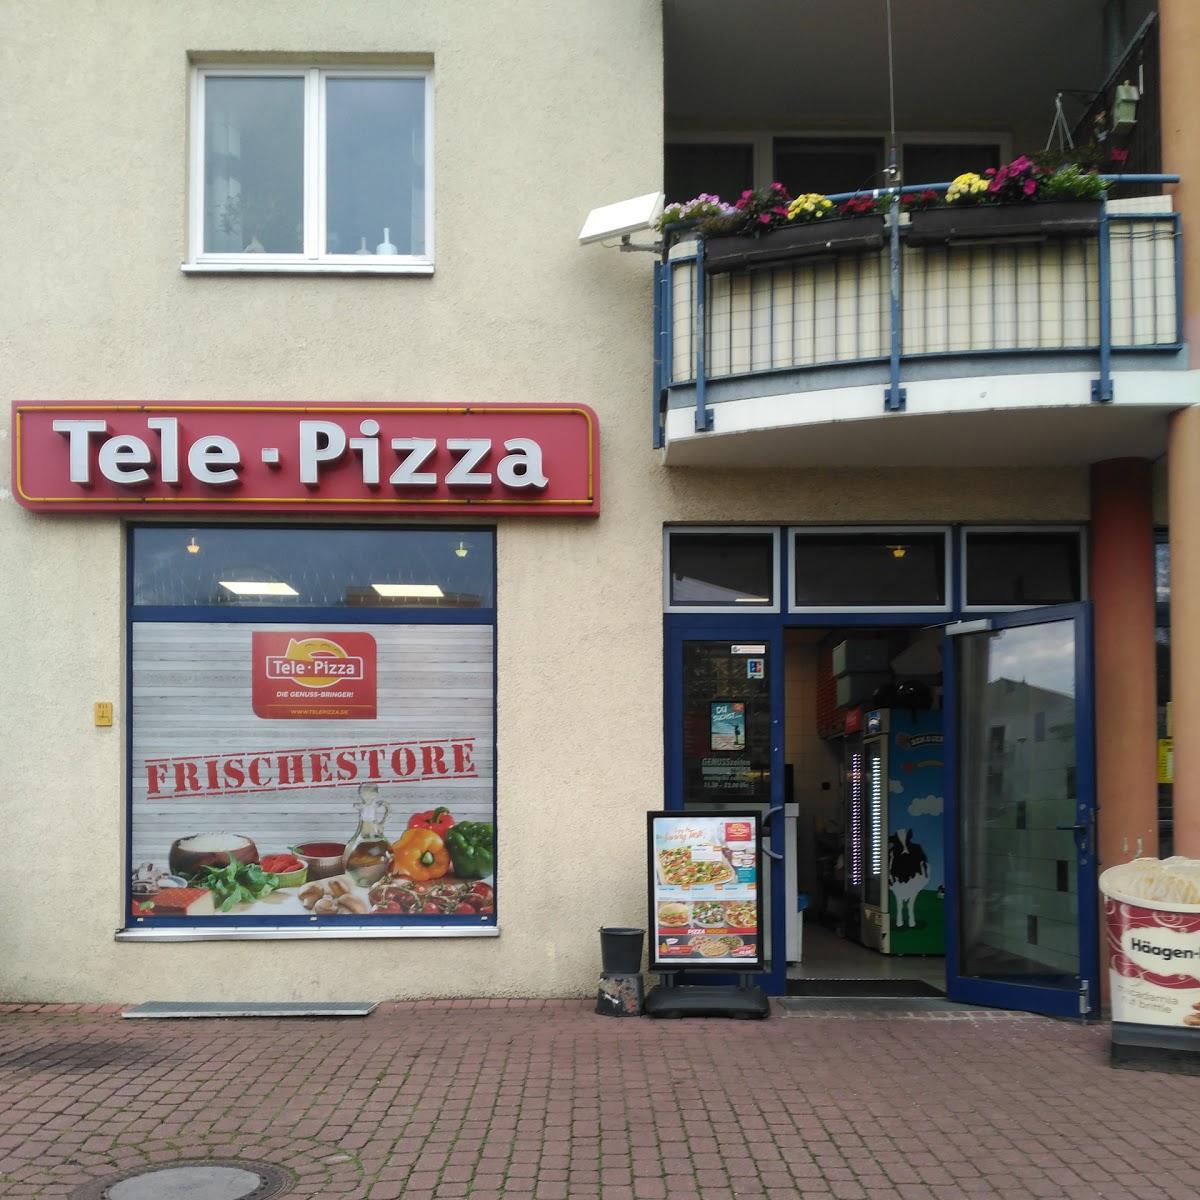 Restaurant "Tele Pizza" in Berlin